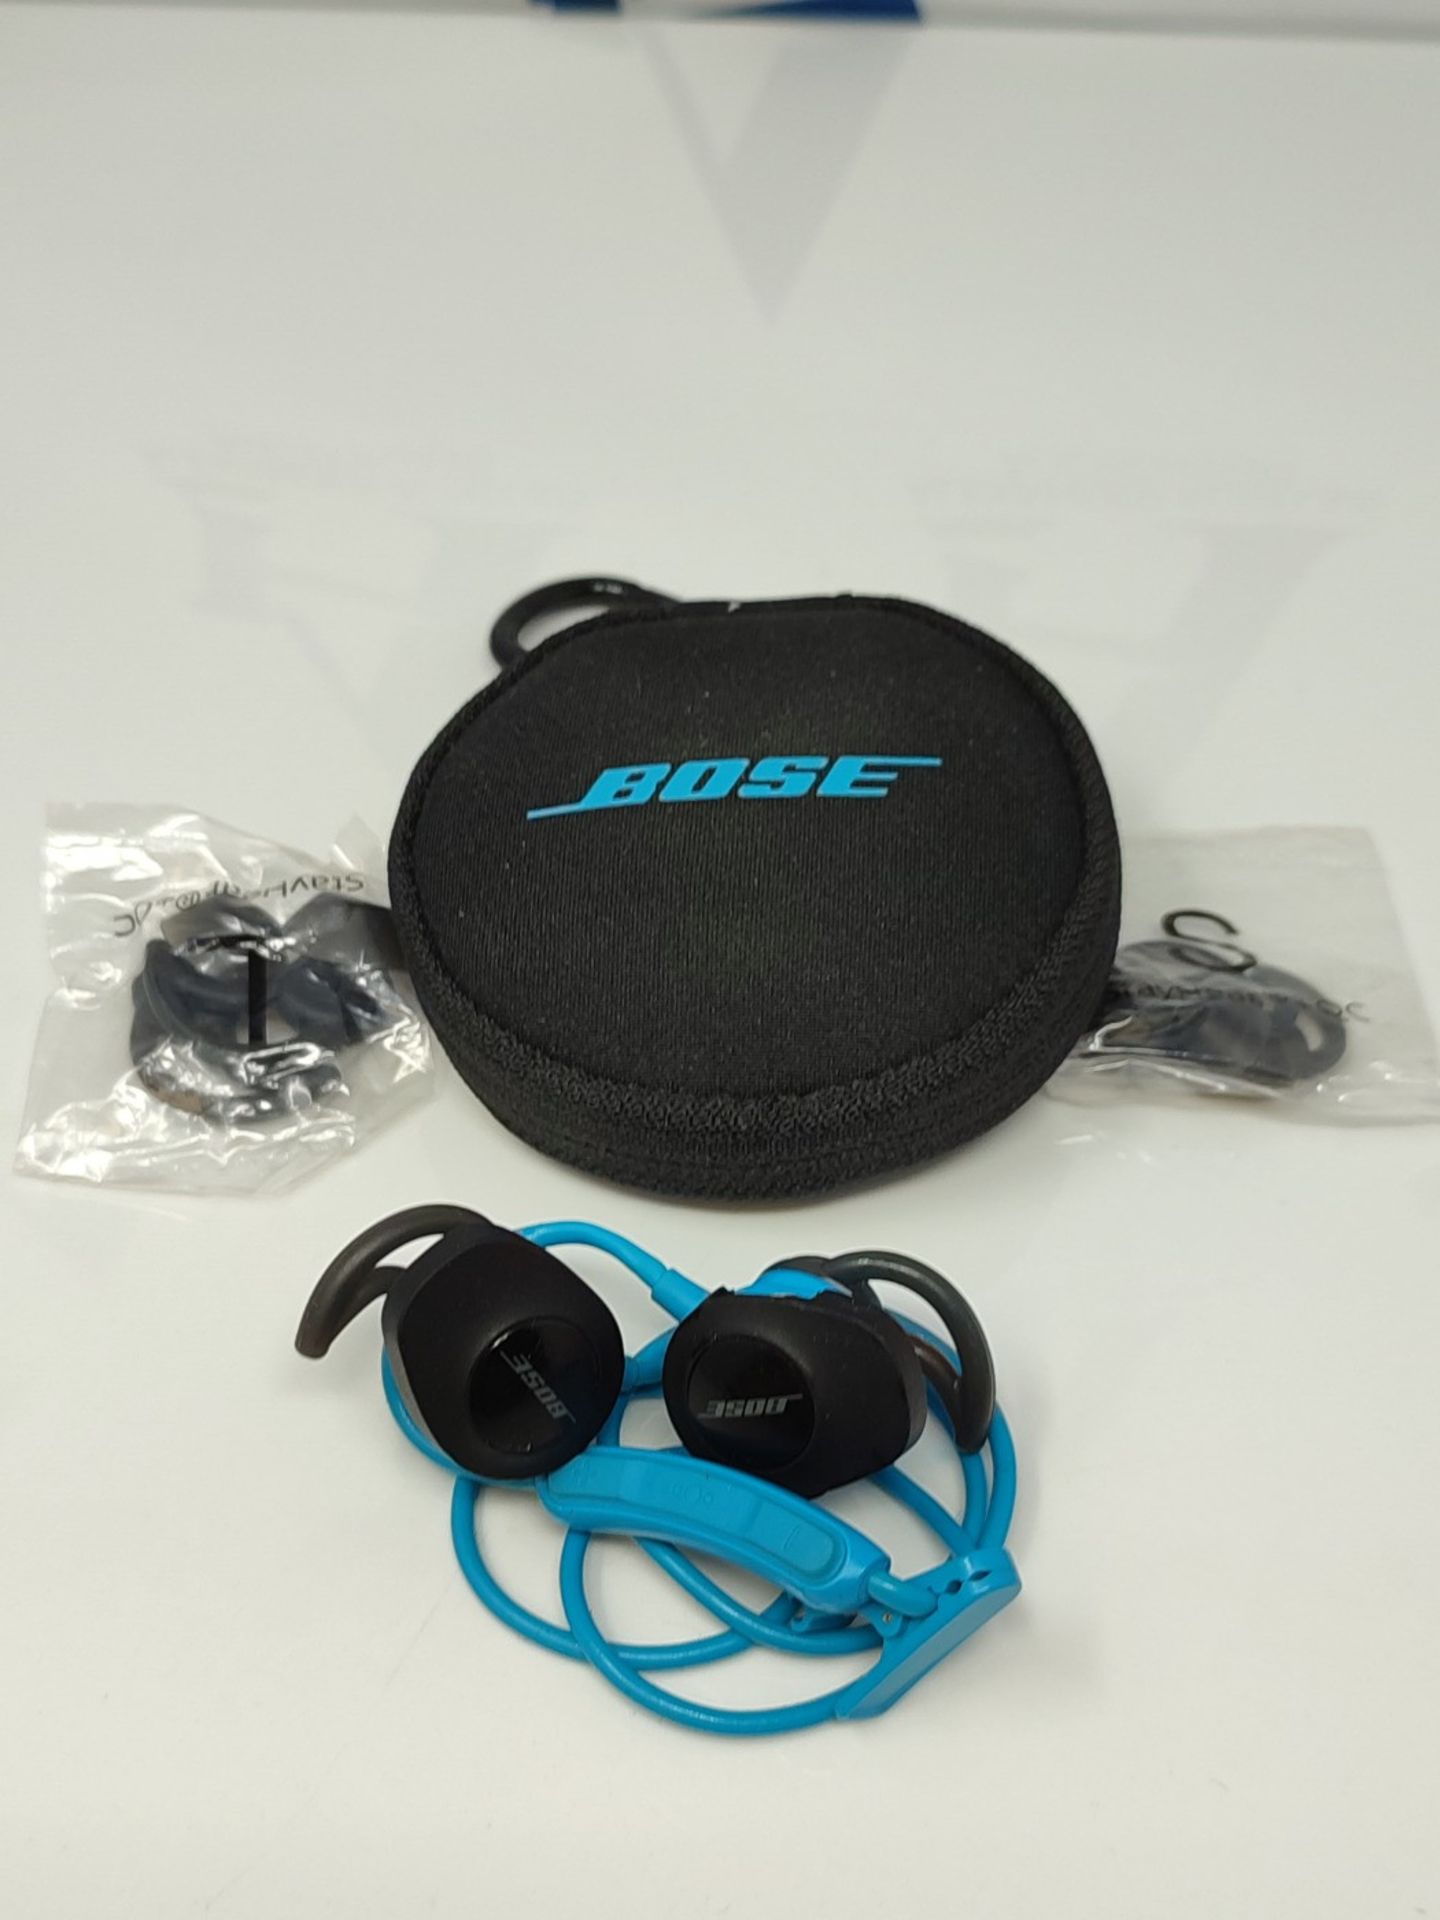 RRP £142.00 Bose SoundSport Wireless Headphones - Blue